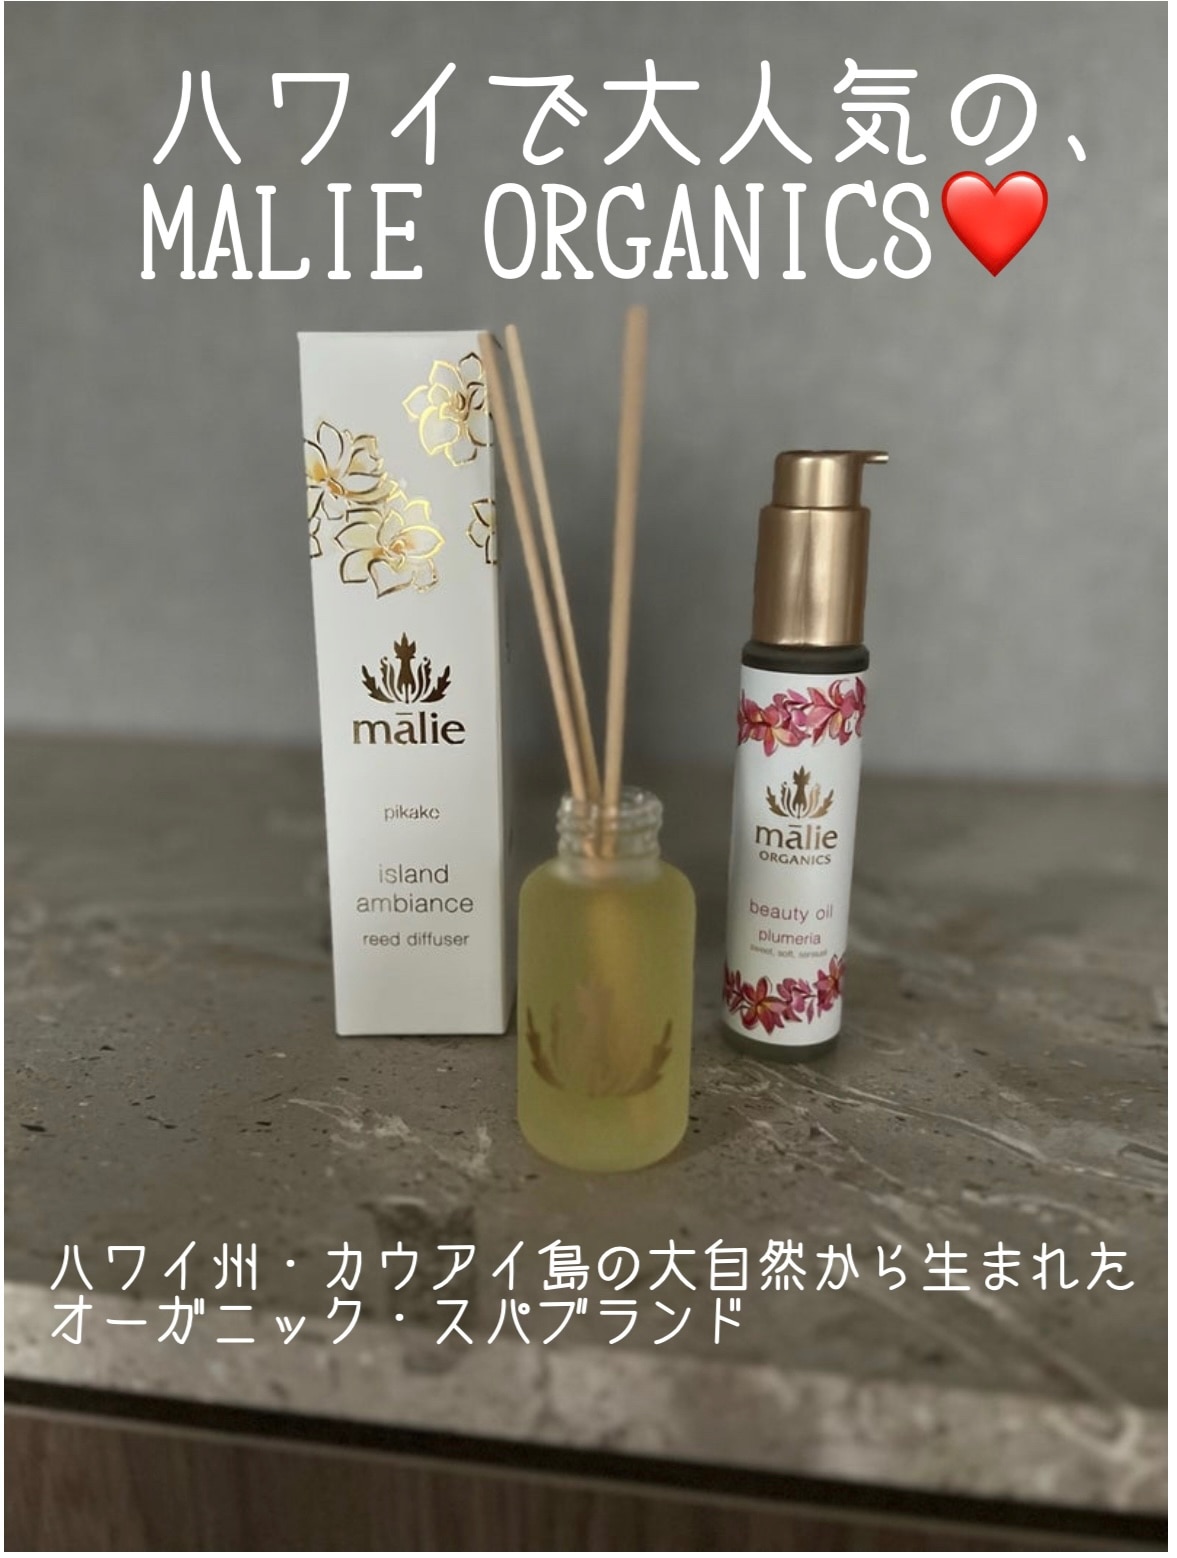 Malie Organics (公式)Travel Diffuser Pikake マリエオーガ二クス